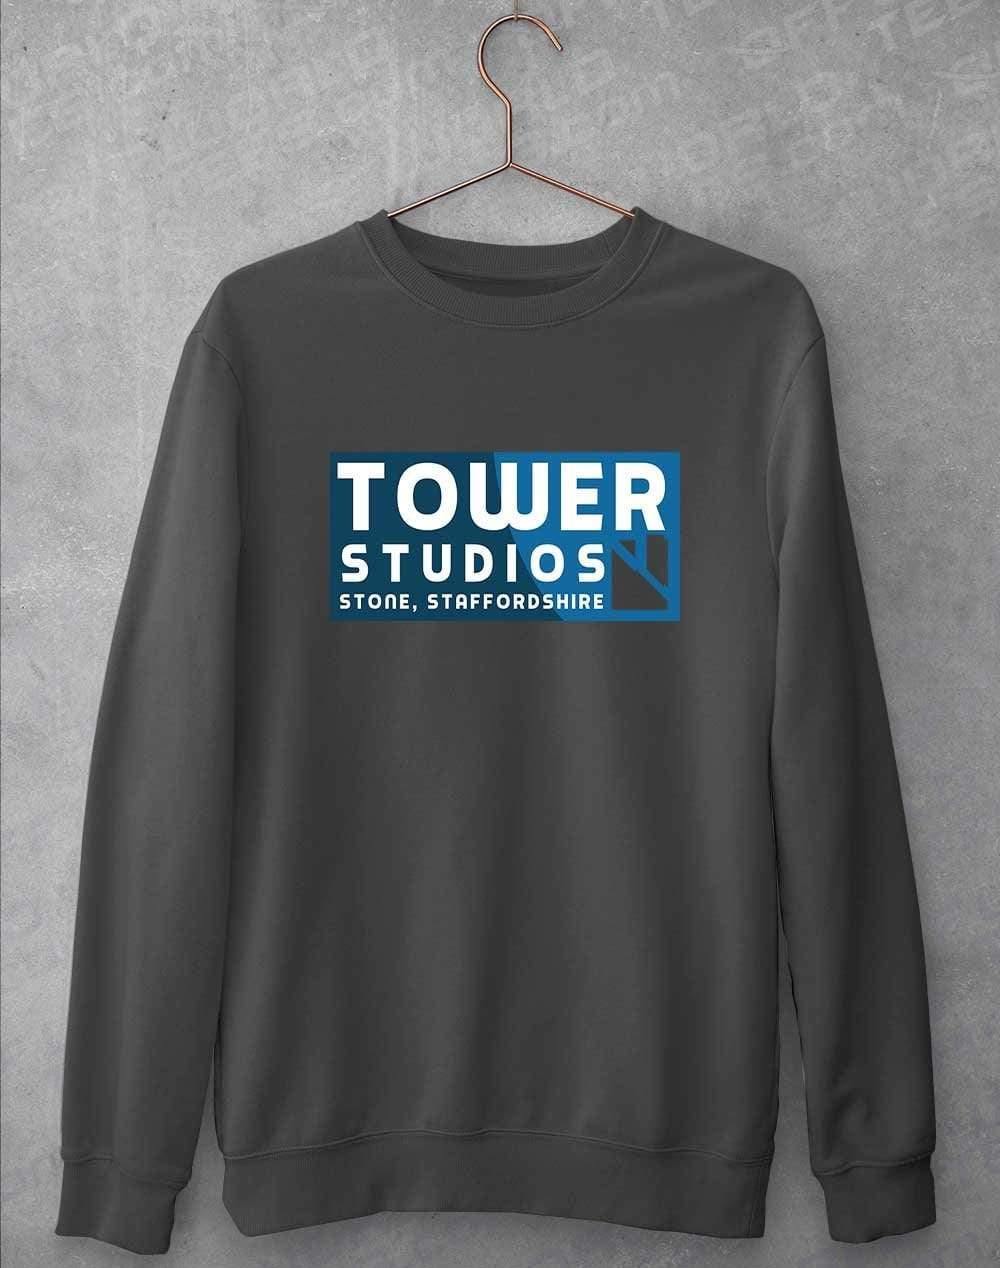 Tower Studios Cut Out Logo Sweatshirt S / Charcoal  - Off World Tees